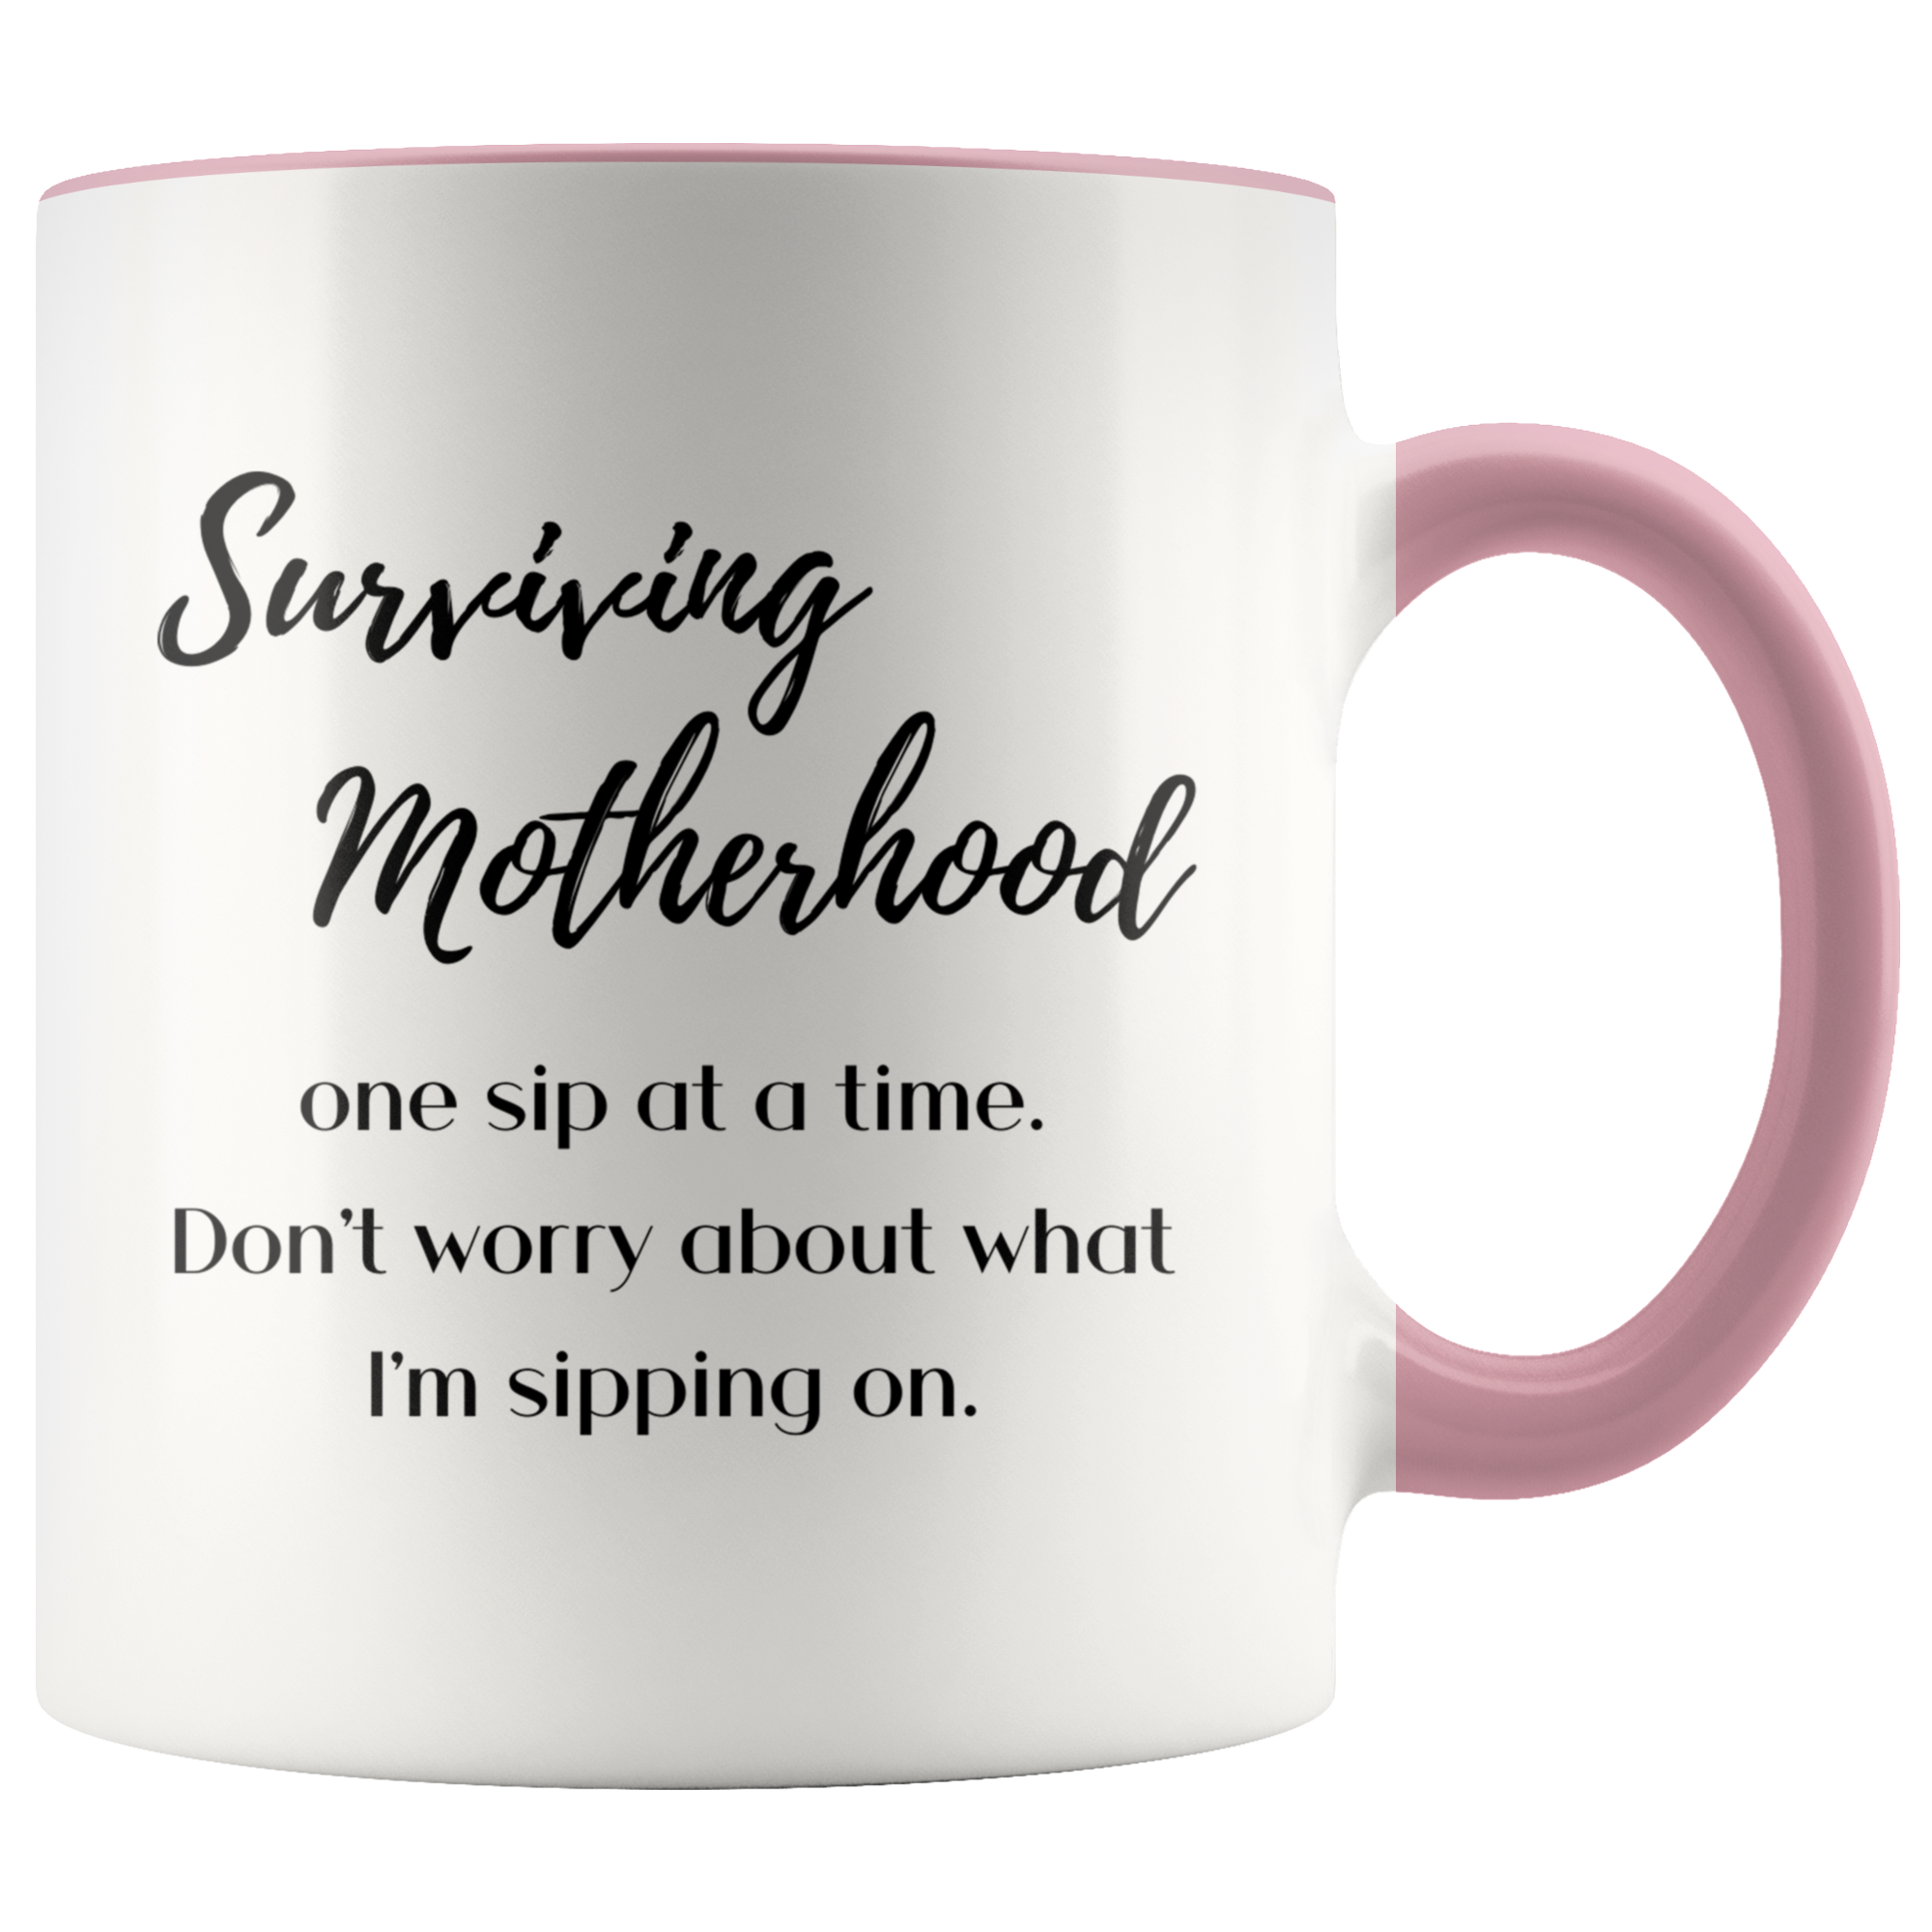 Surviving Motherhood